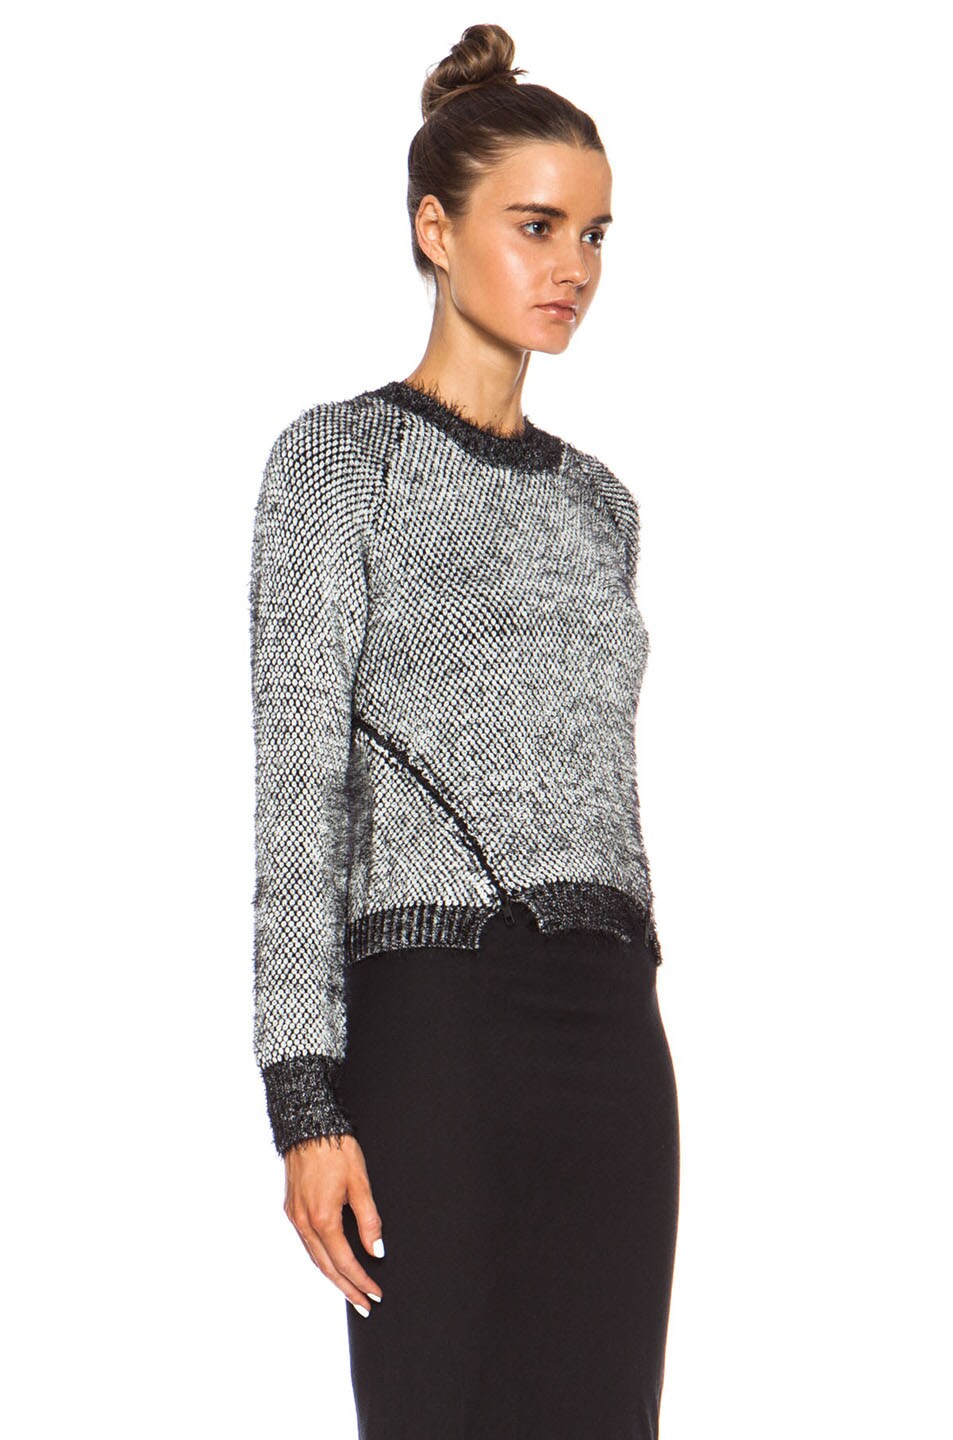 JONATHAN SIMKHAI Texture Mesh Zip Sweater in Black & White | FWRD